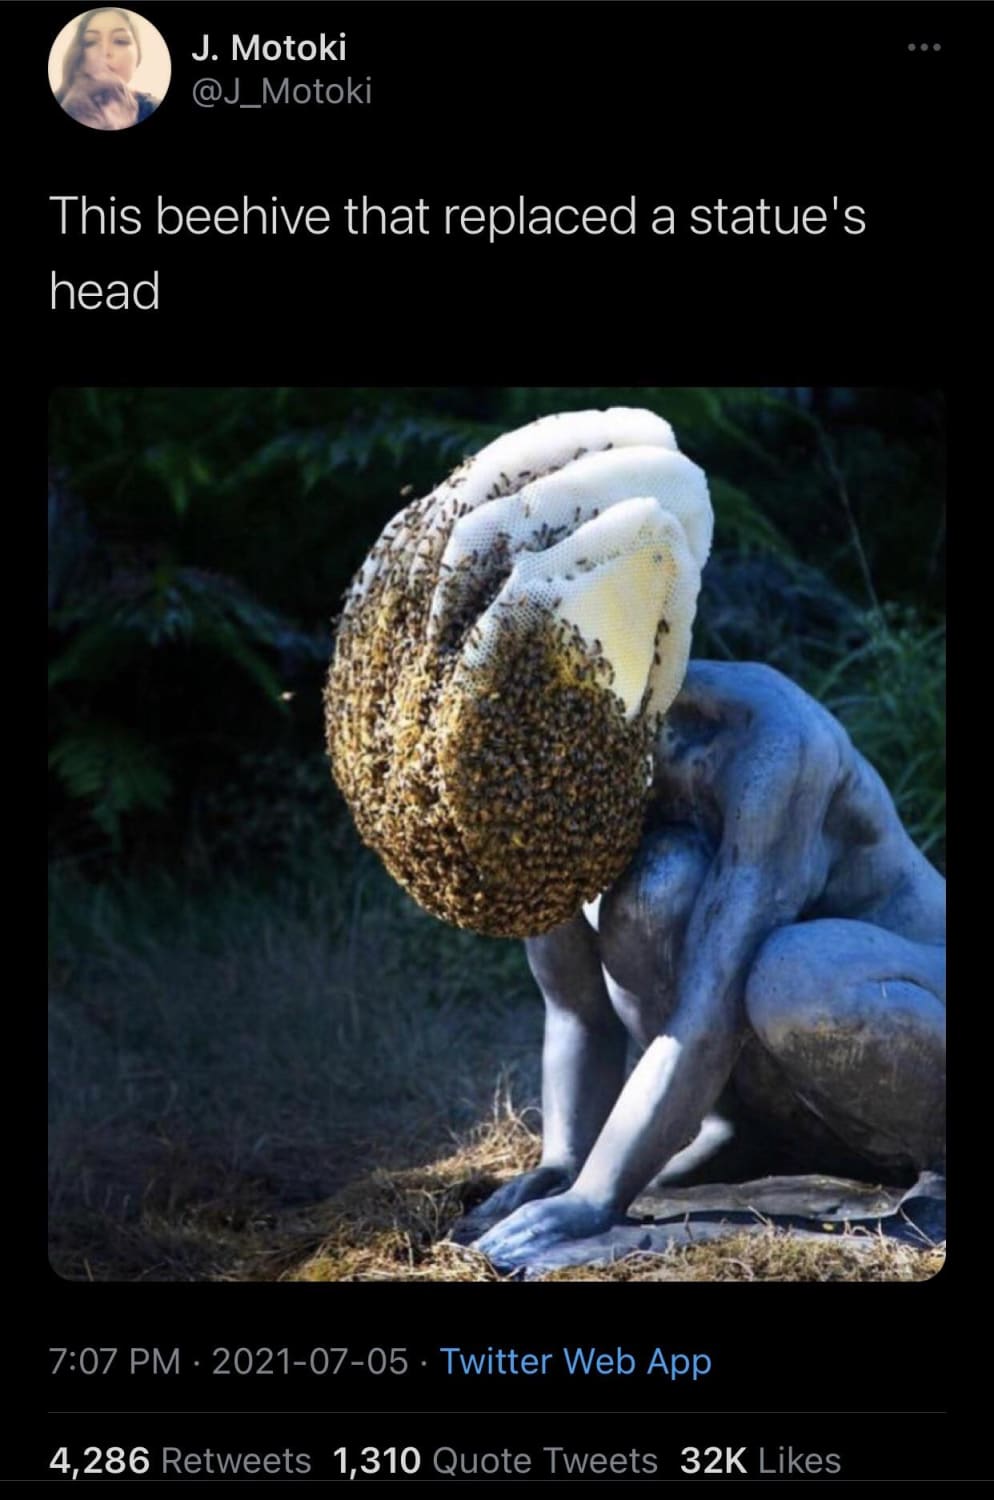 Bee hive replacing statue's head